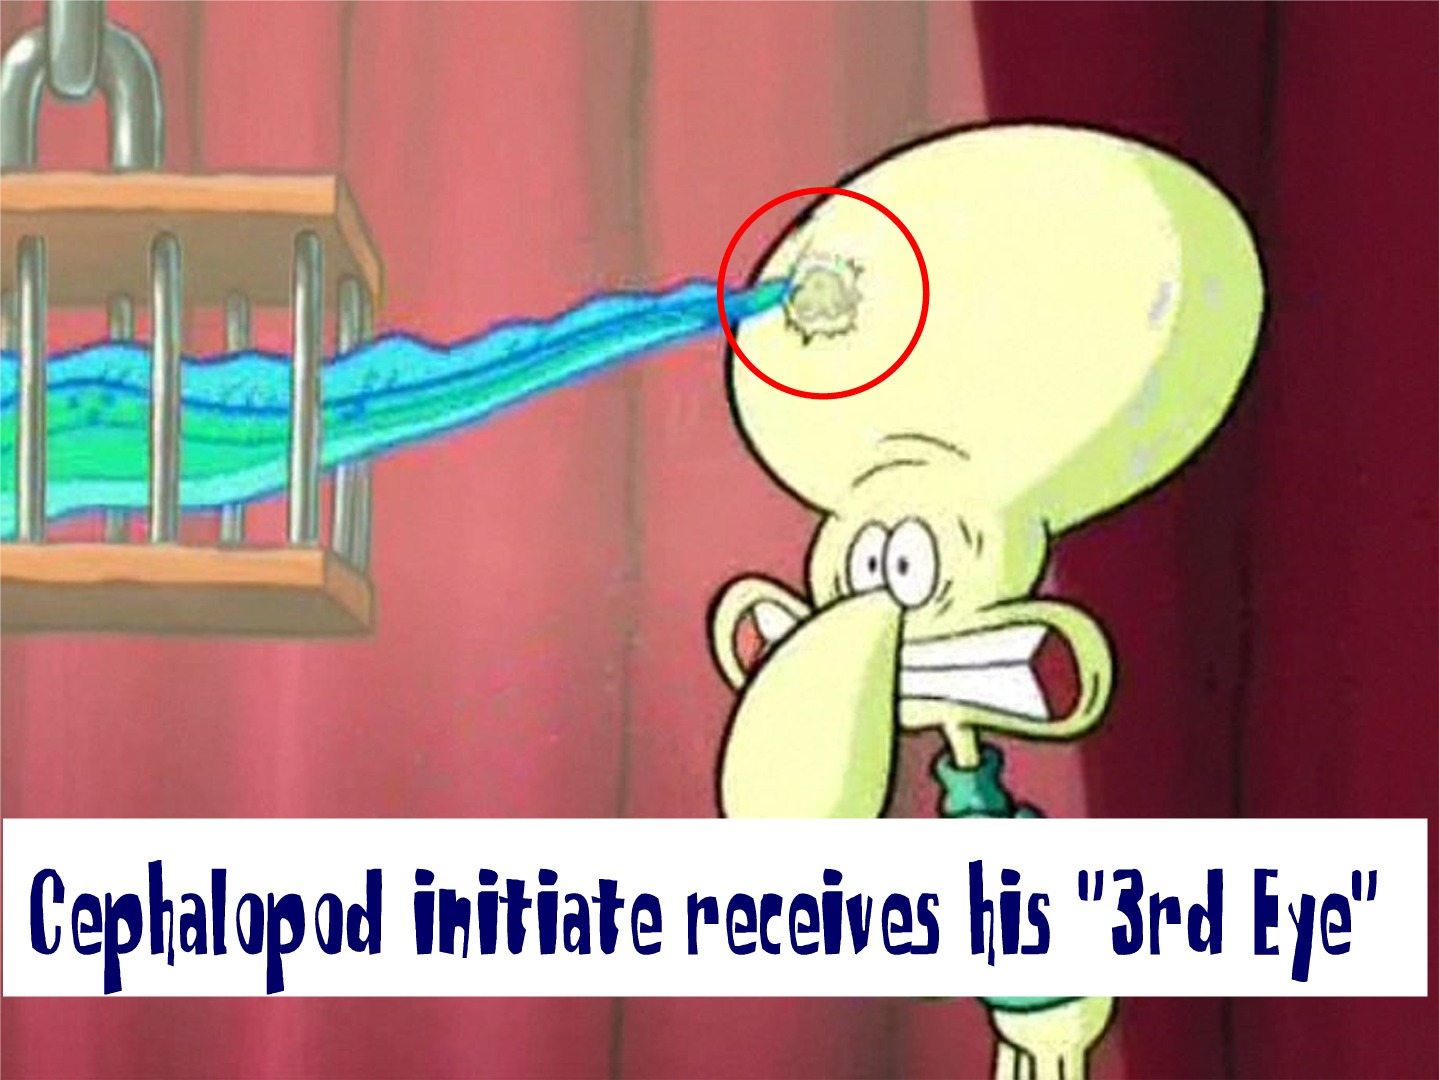 cephalopod lodge - Cephalopod initiate receives his "3rd Eye"